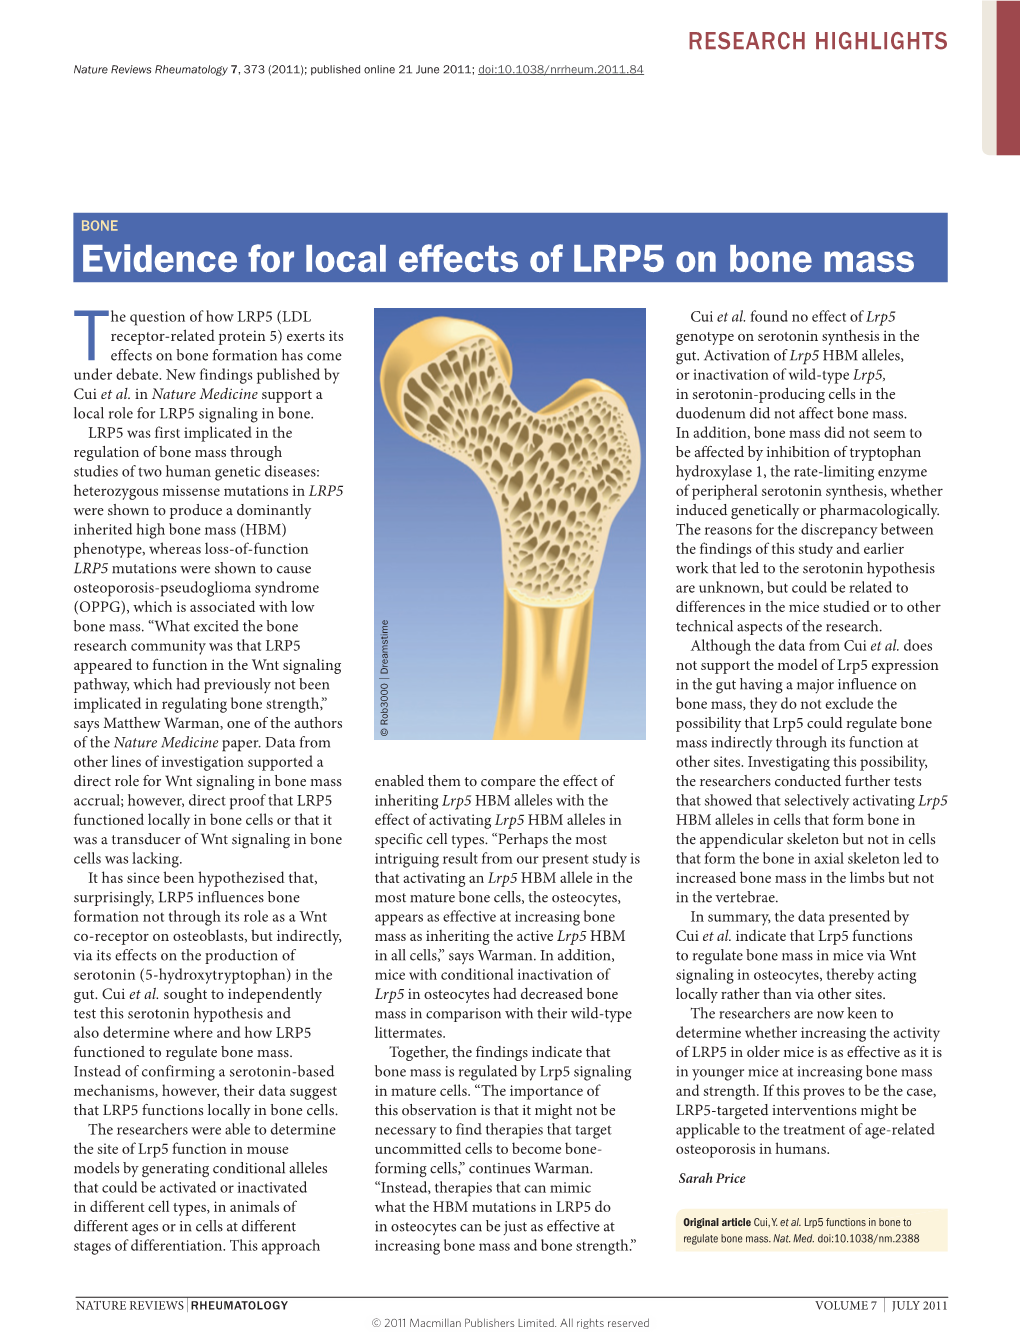 Boneevidence for Local Effects of LRP5 on Bone Mass